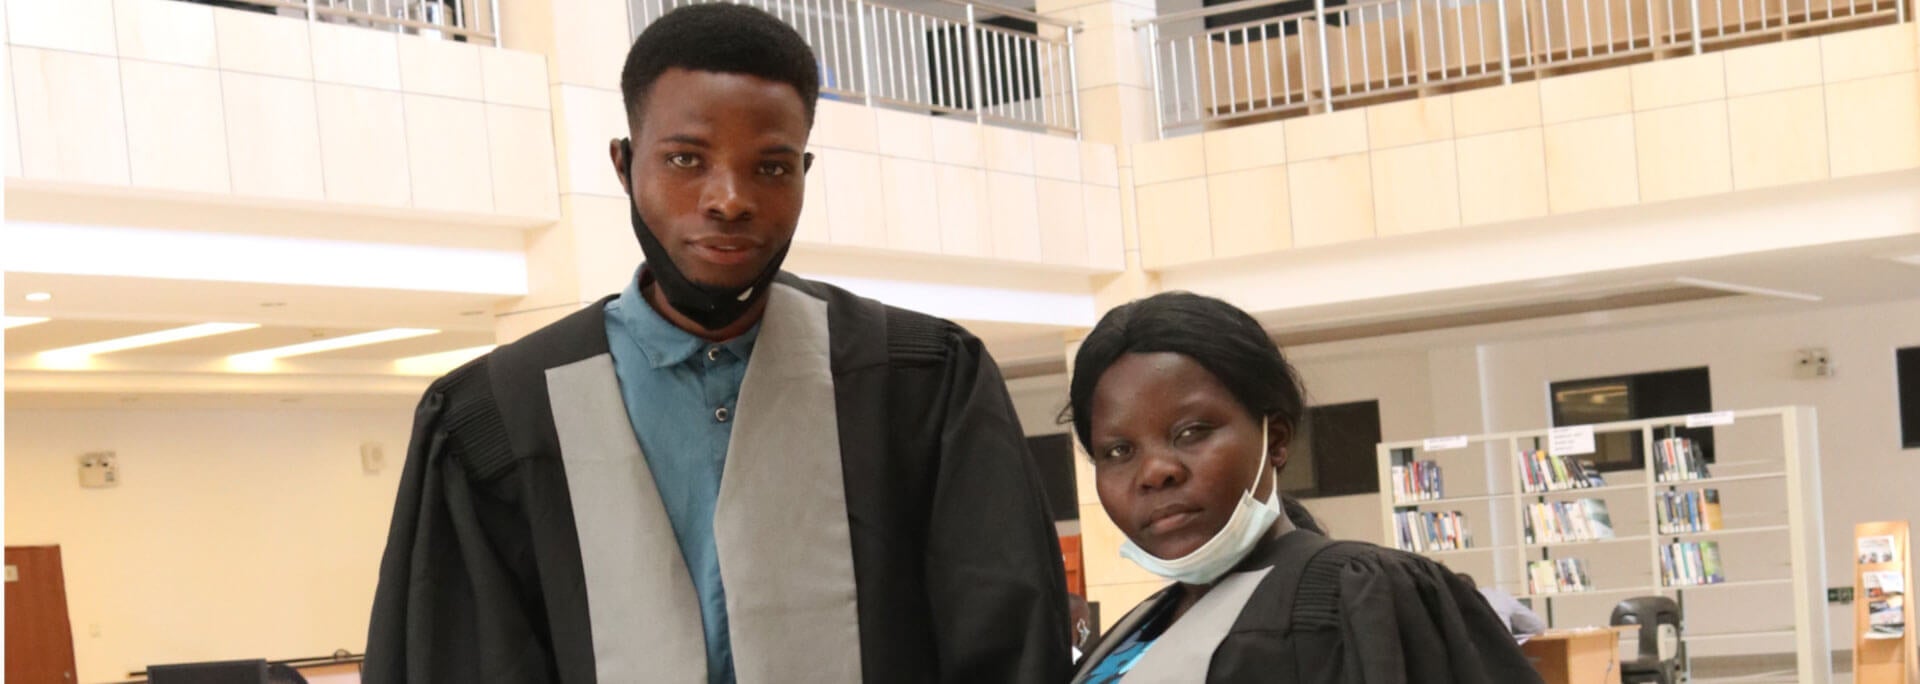 Amadu and Grace at graduation